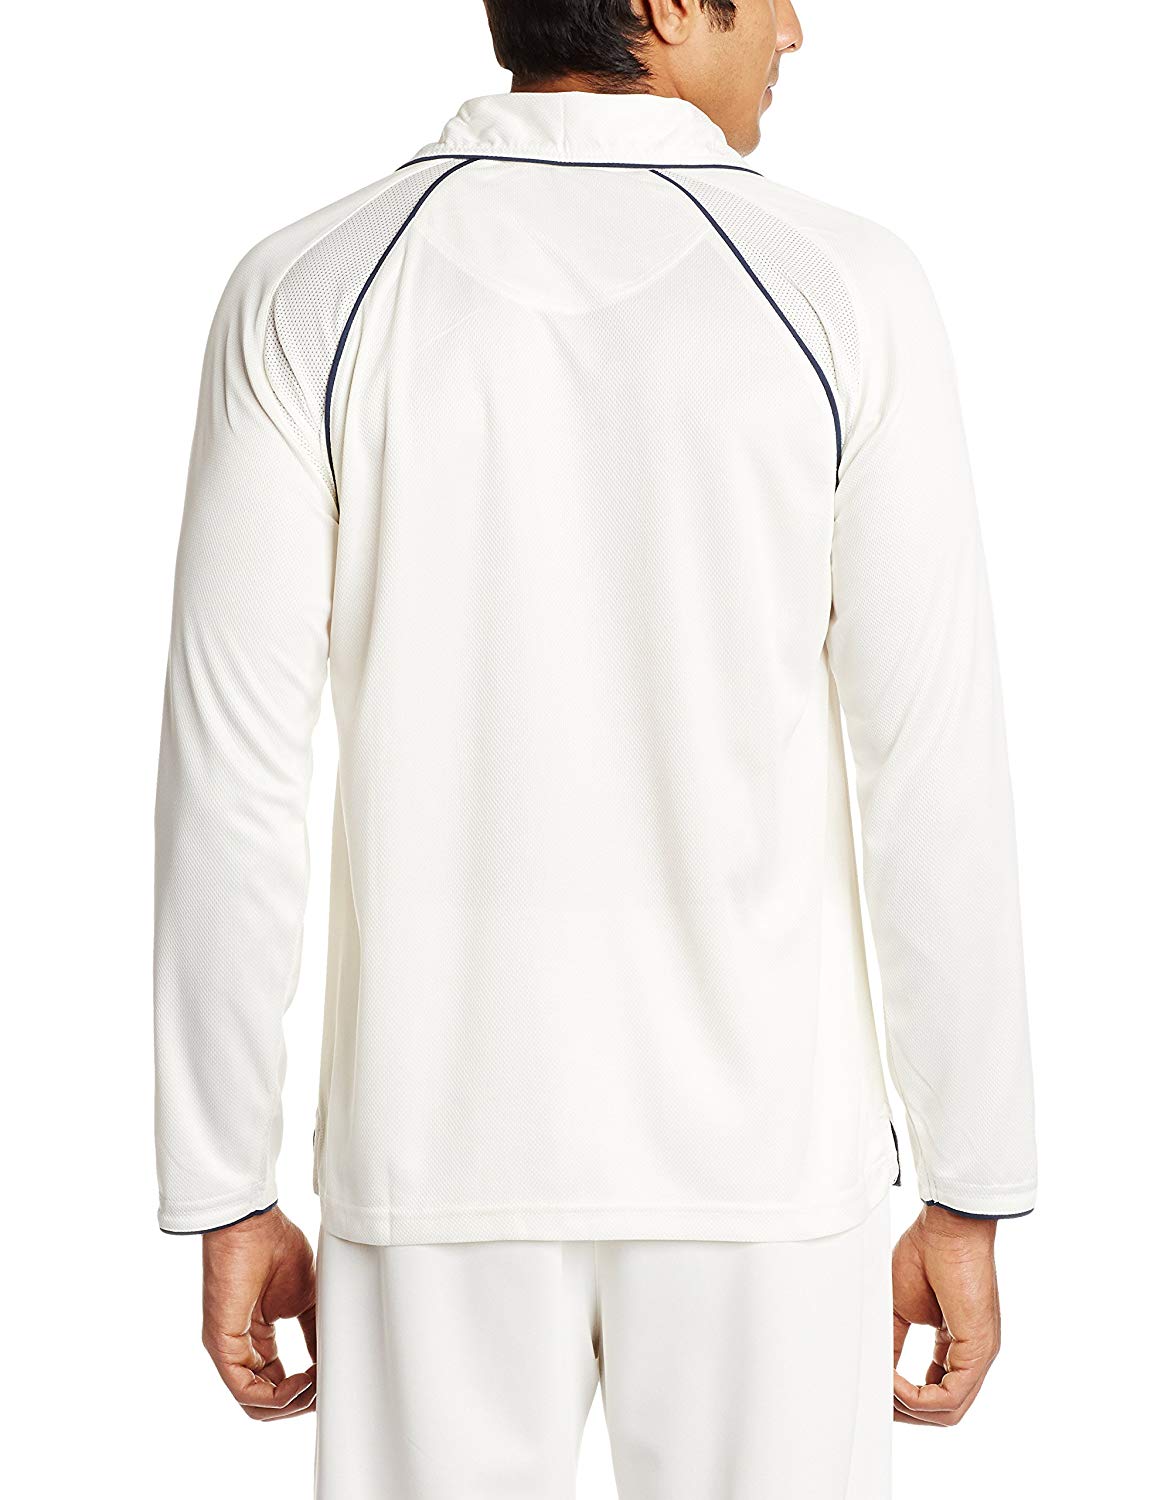 SG Premium Full Sleeves Cricket Shirt (White) - Best Price online Prokicksports.com